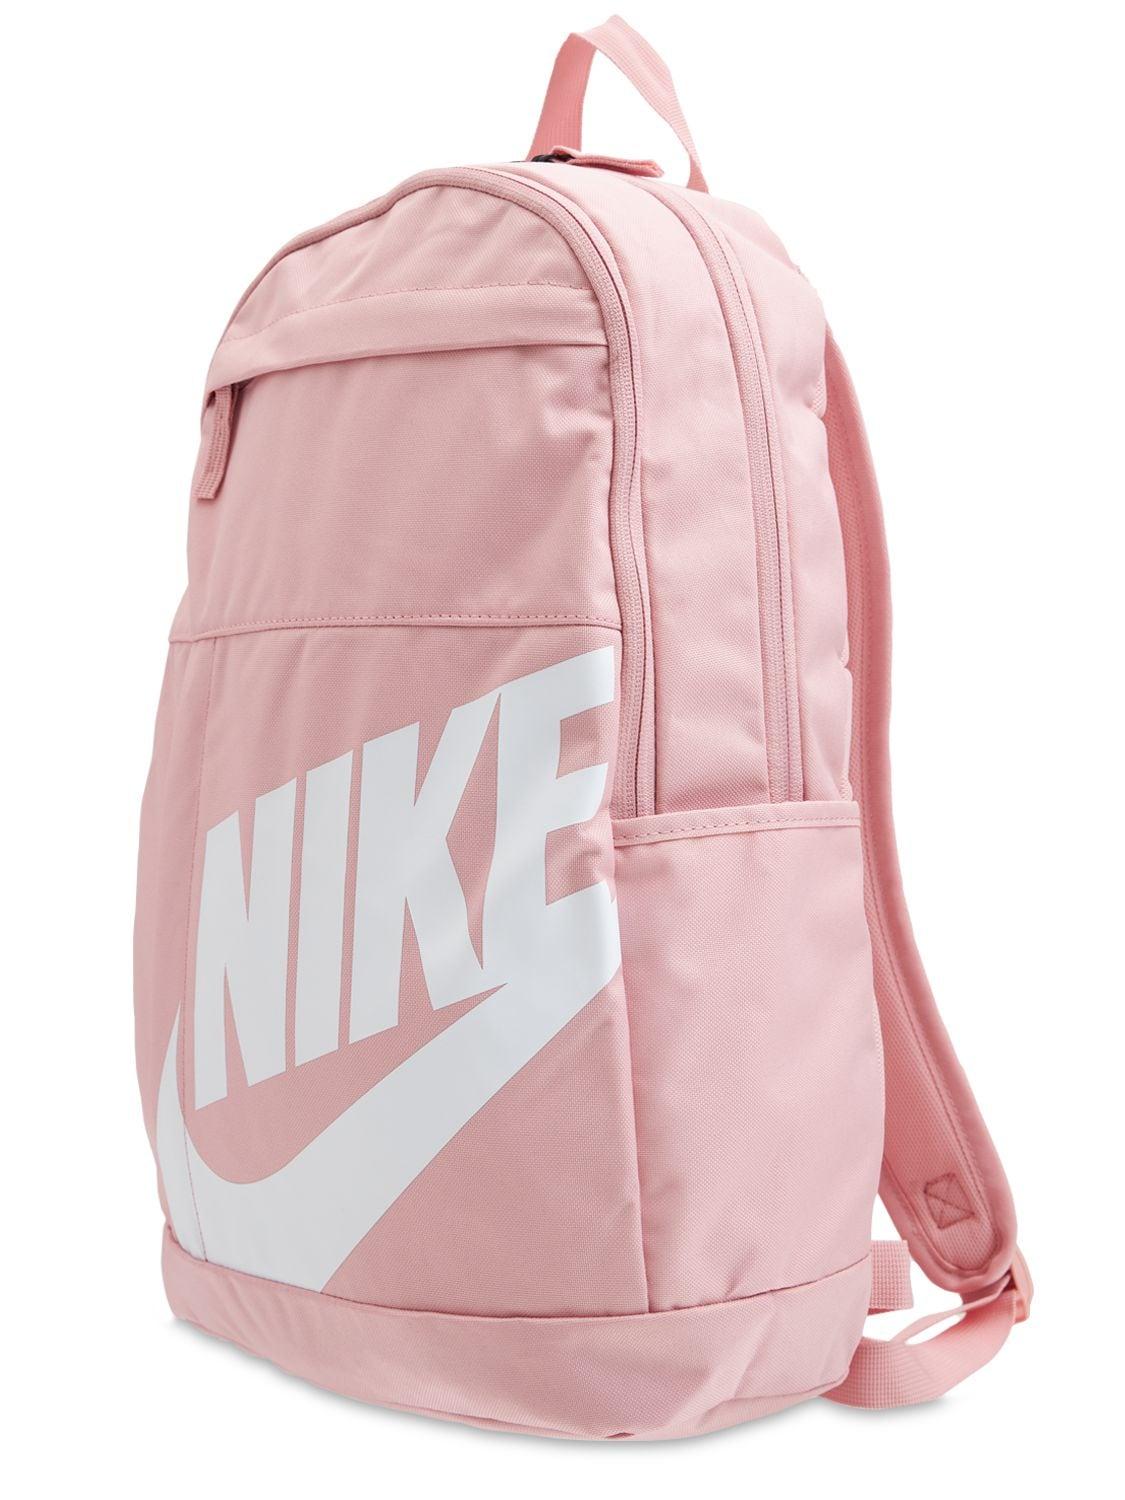 Nike Logo Backpack in Pink - Lyst